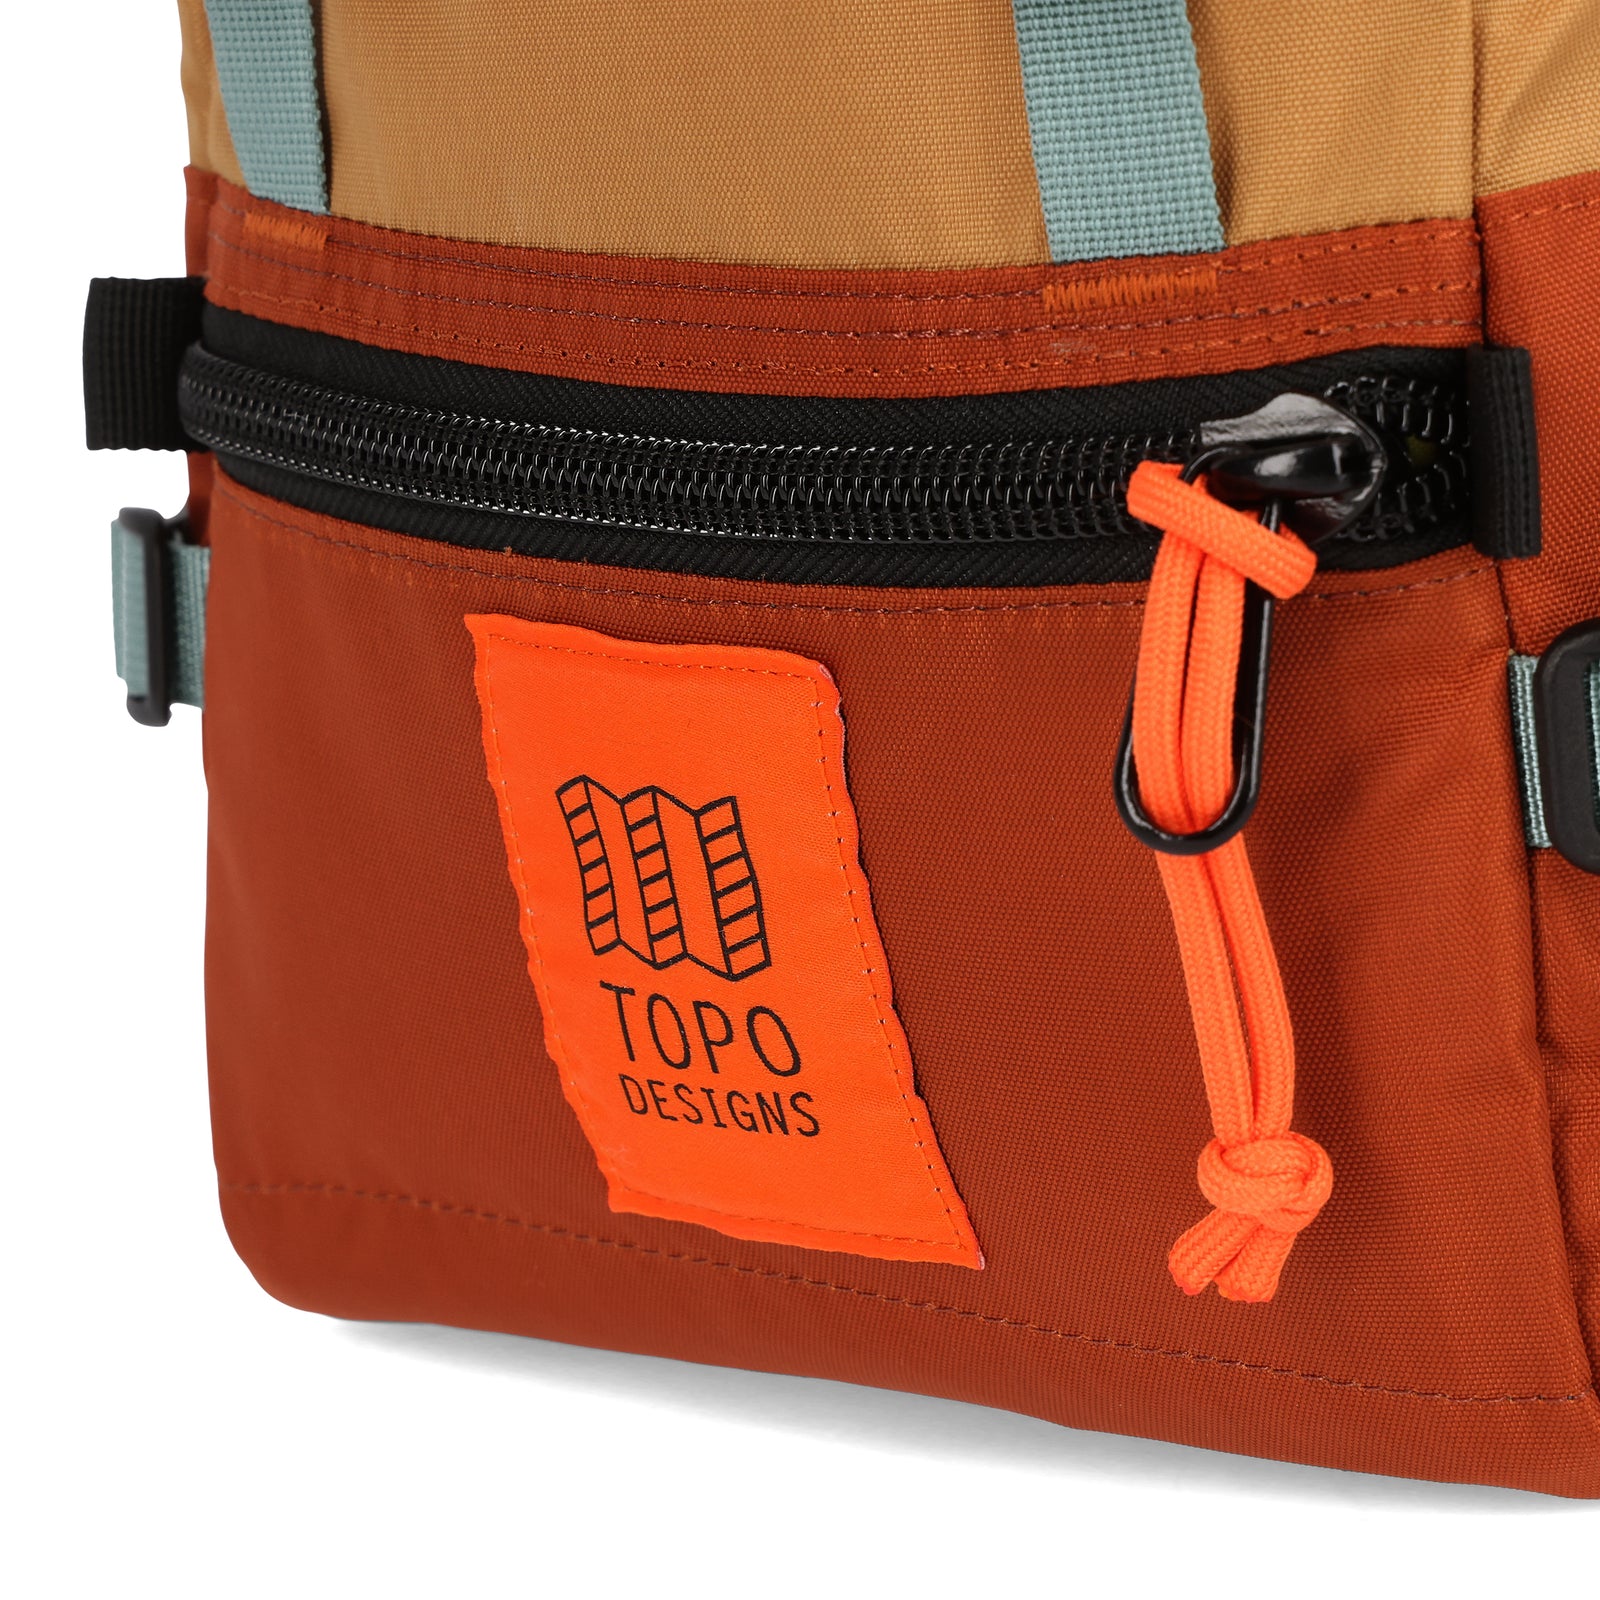 General shot Topo Designs Rover Pack Mini backpack in "Clay / Khaki".